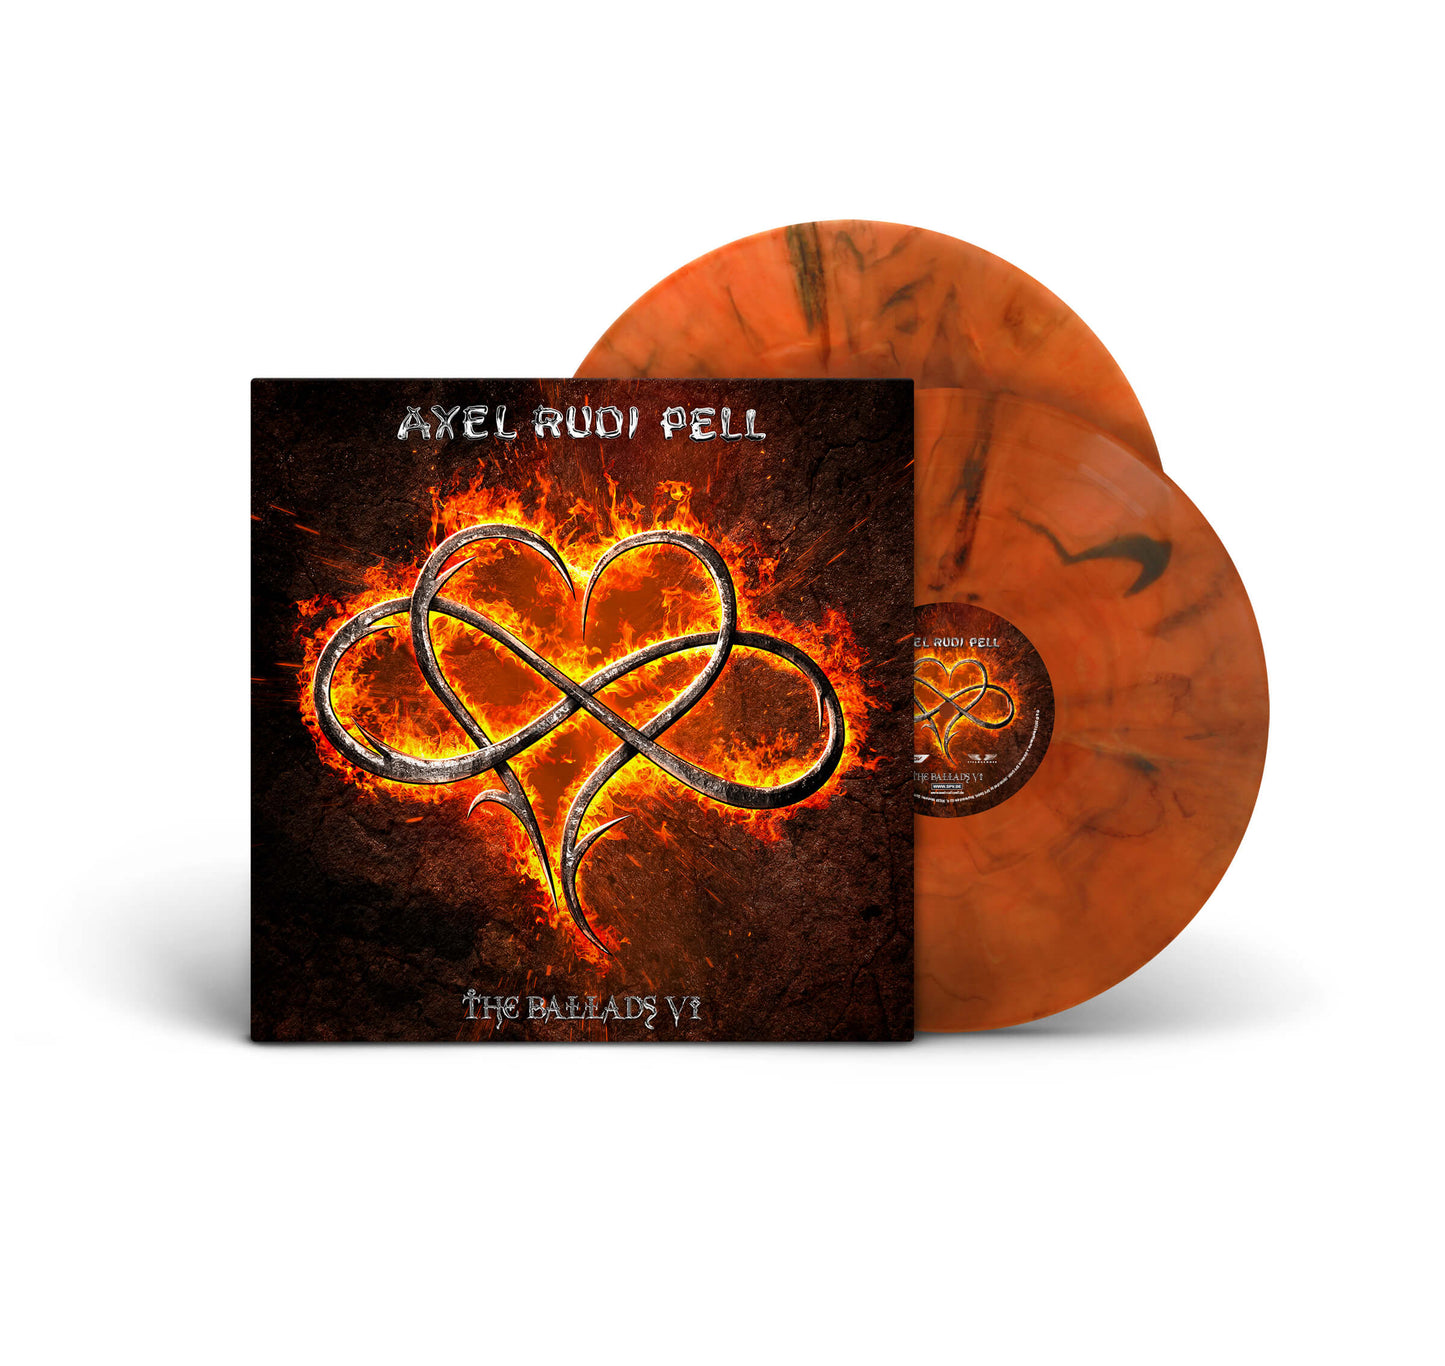 Axel Rudi Pell "The Ballads VI" LP